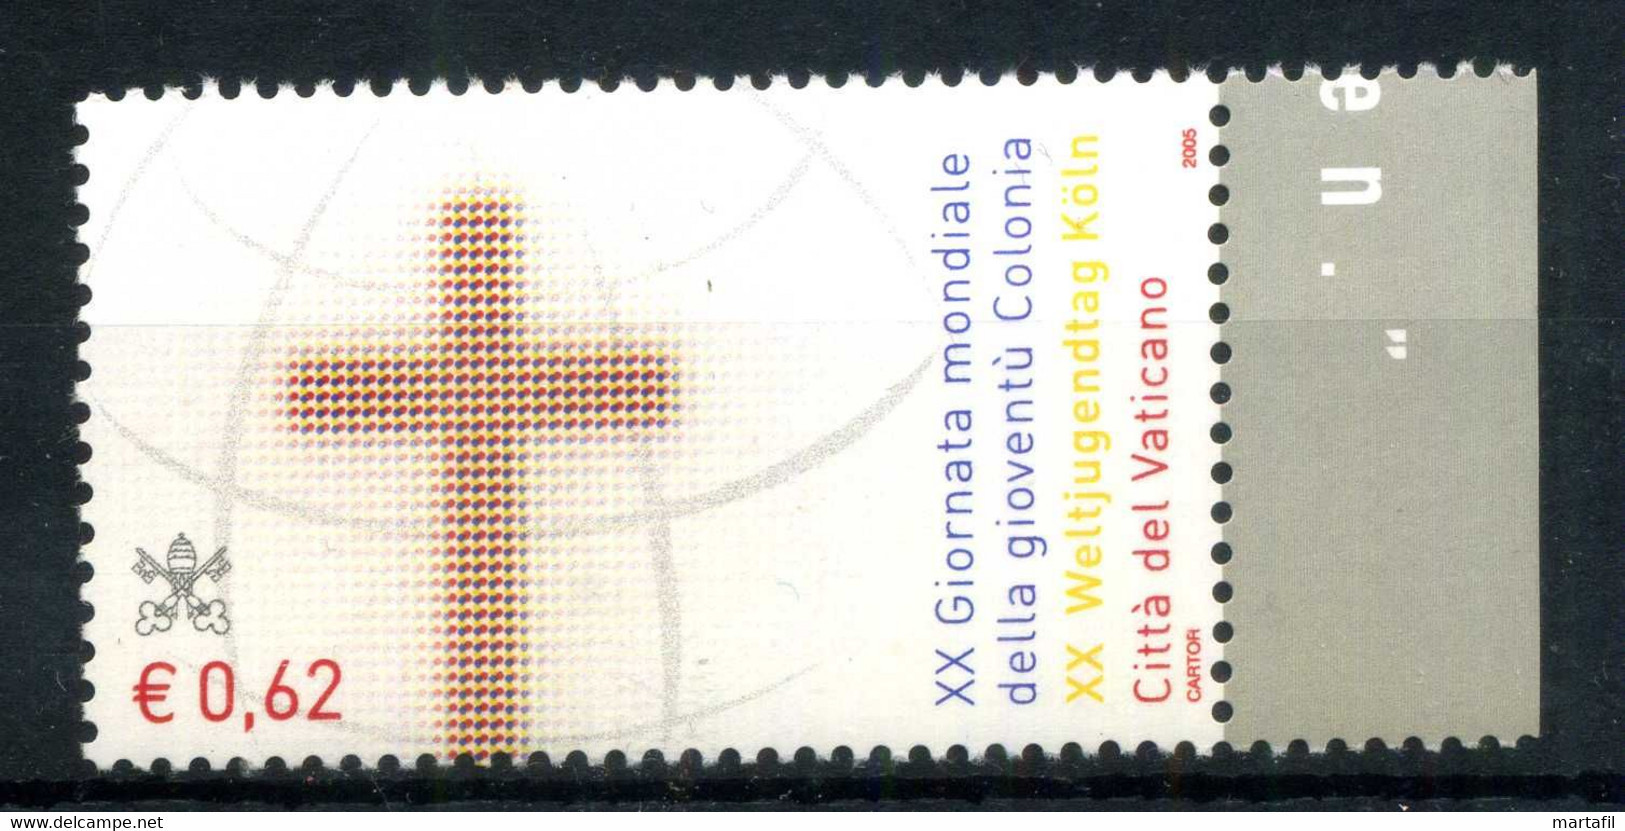 2005 VATICANO SET MNH ** - Unused Stamps